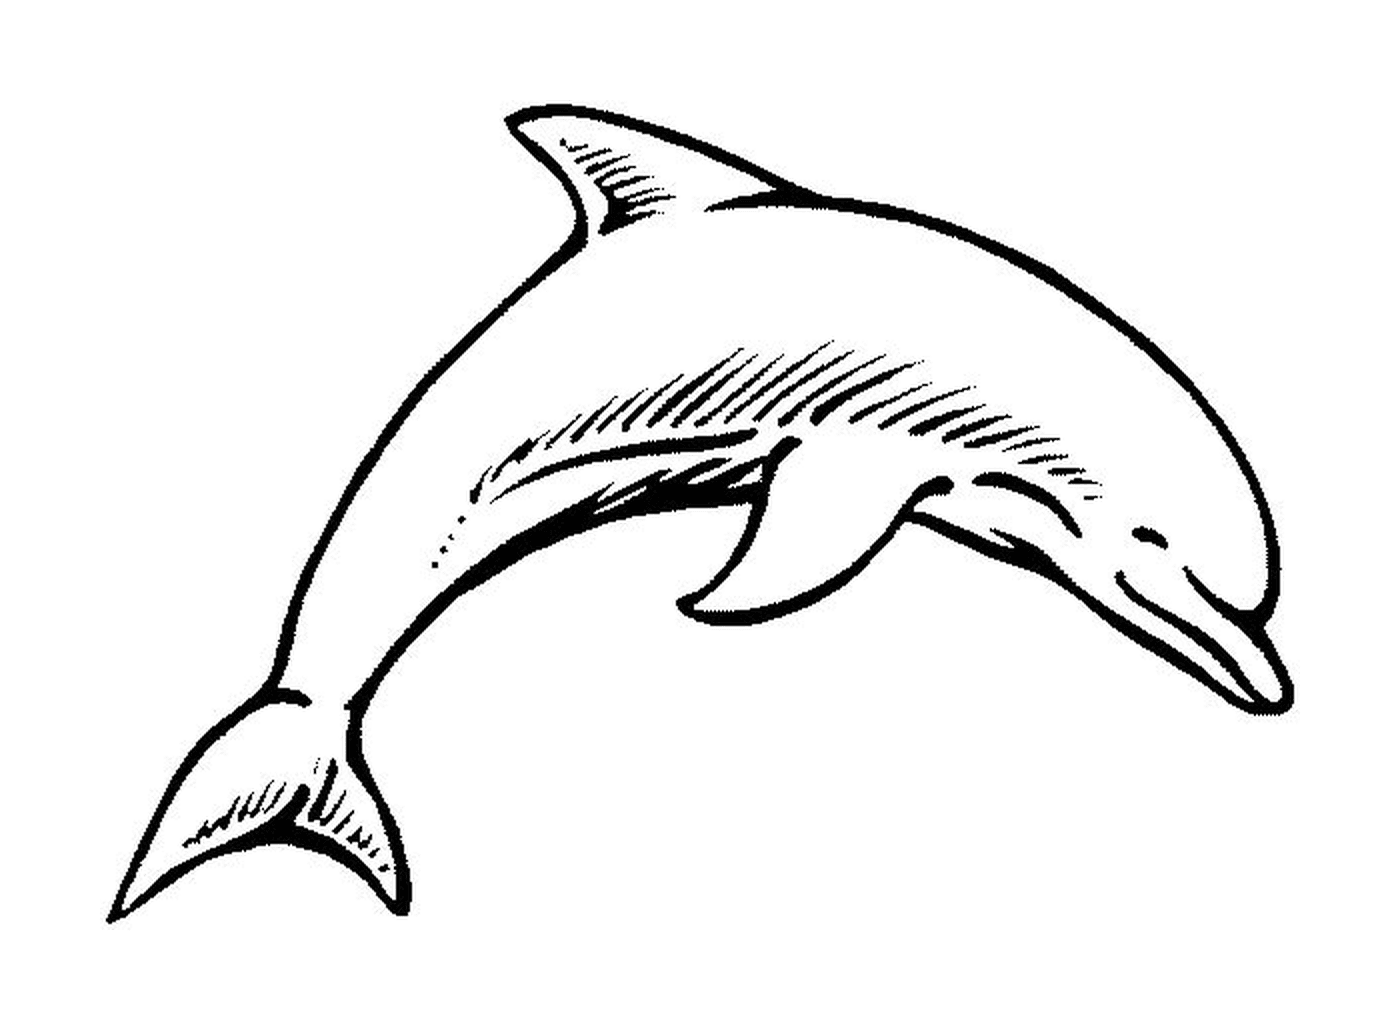   Un dauphin bébé 